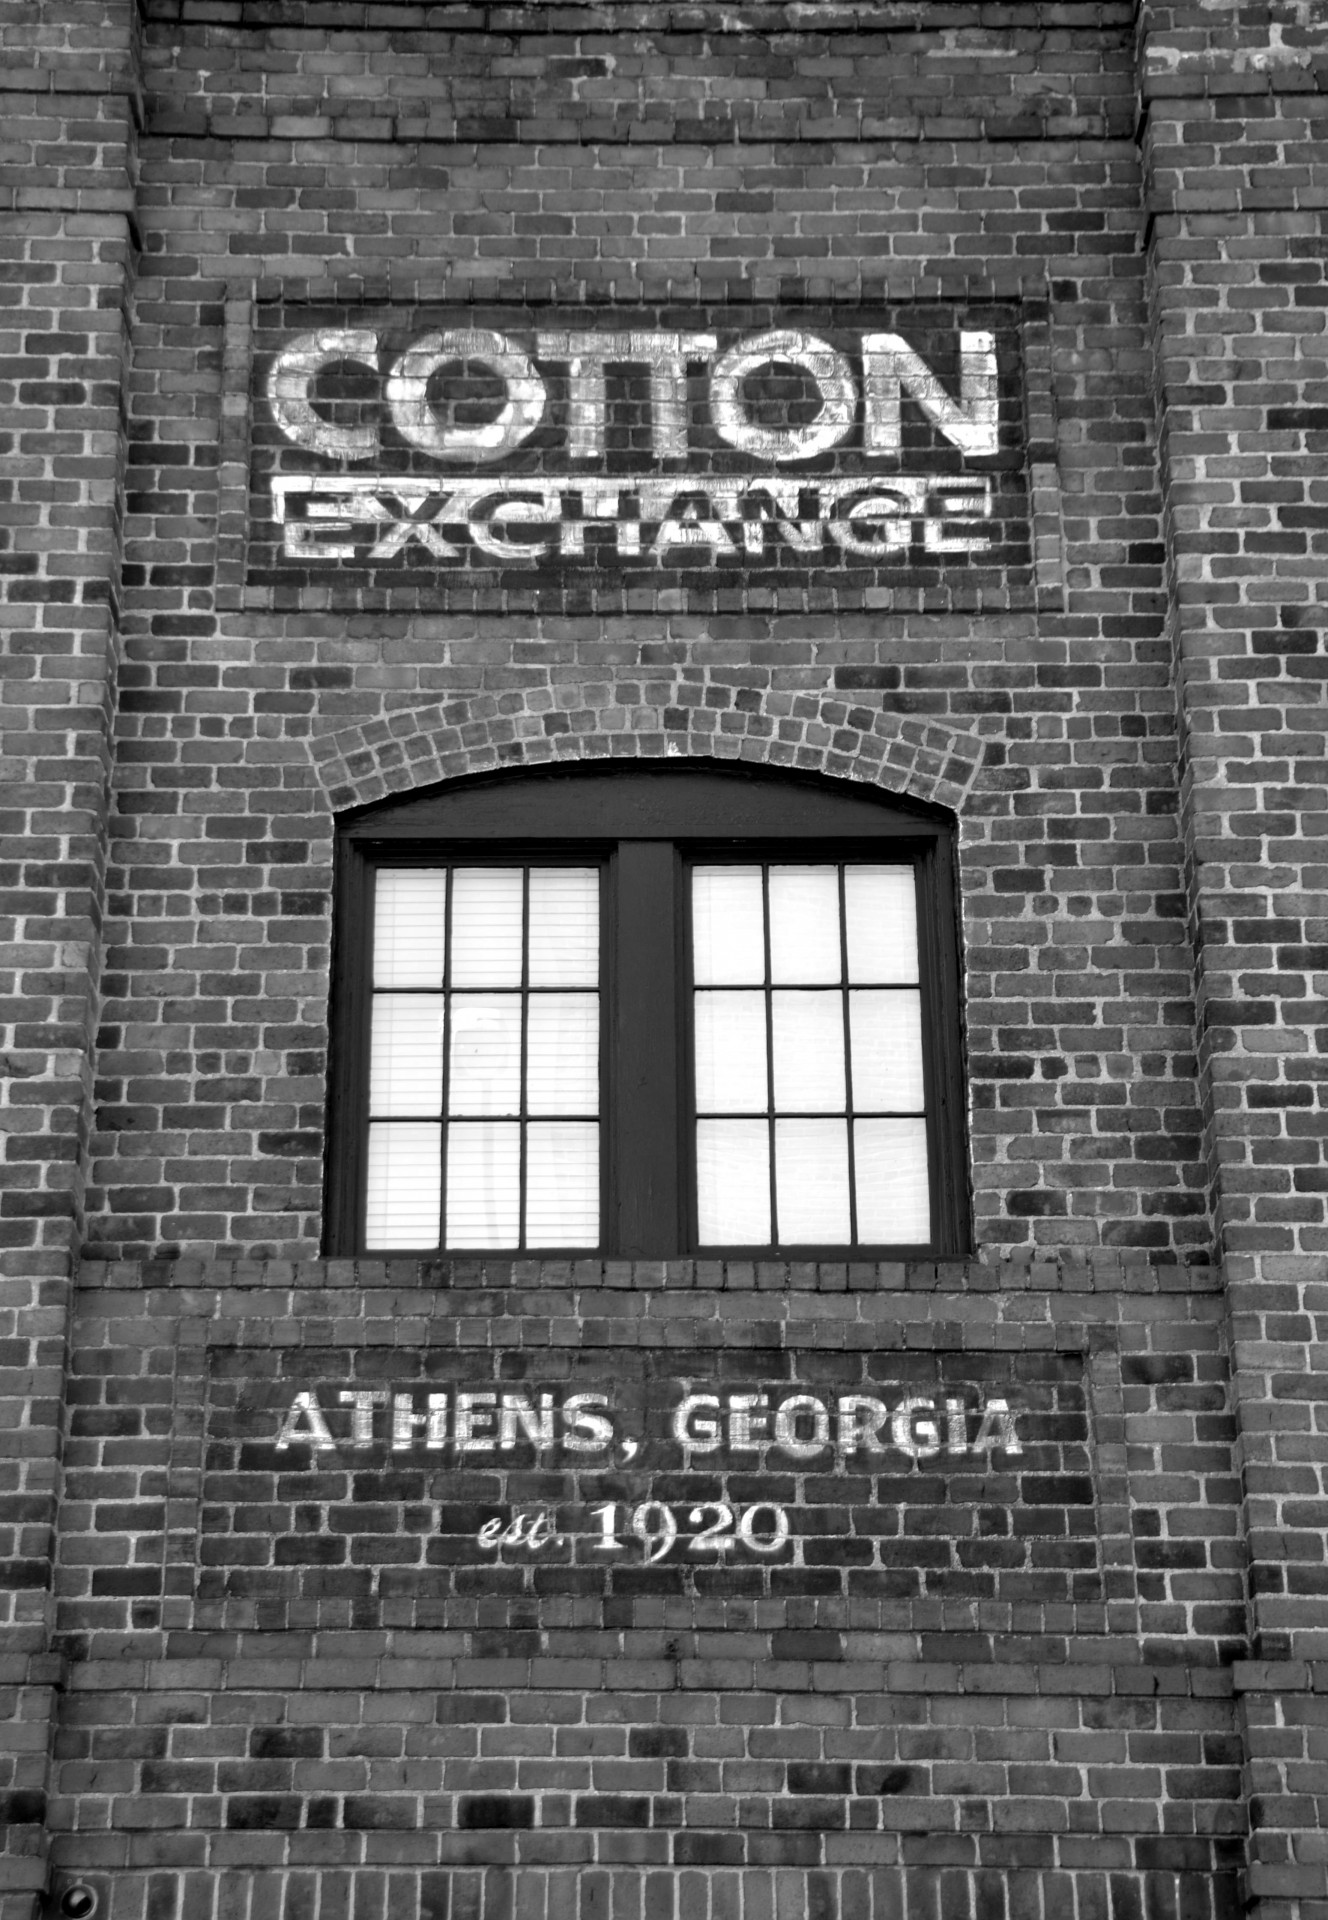 Cotton Exchange Building